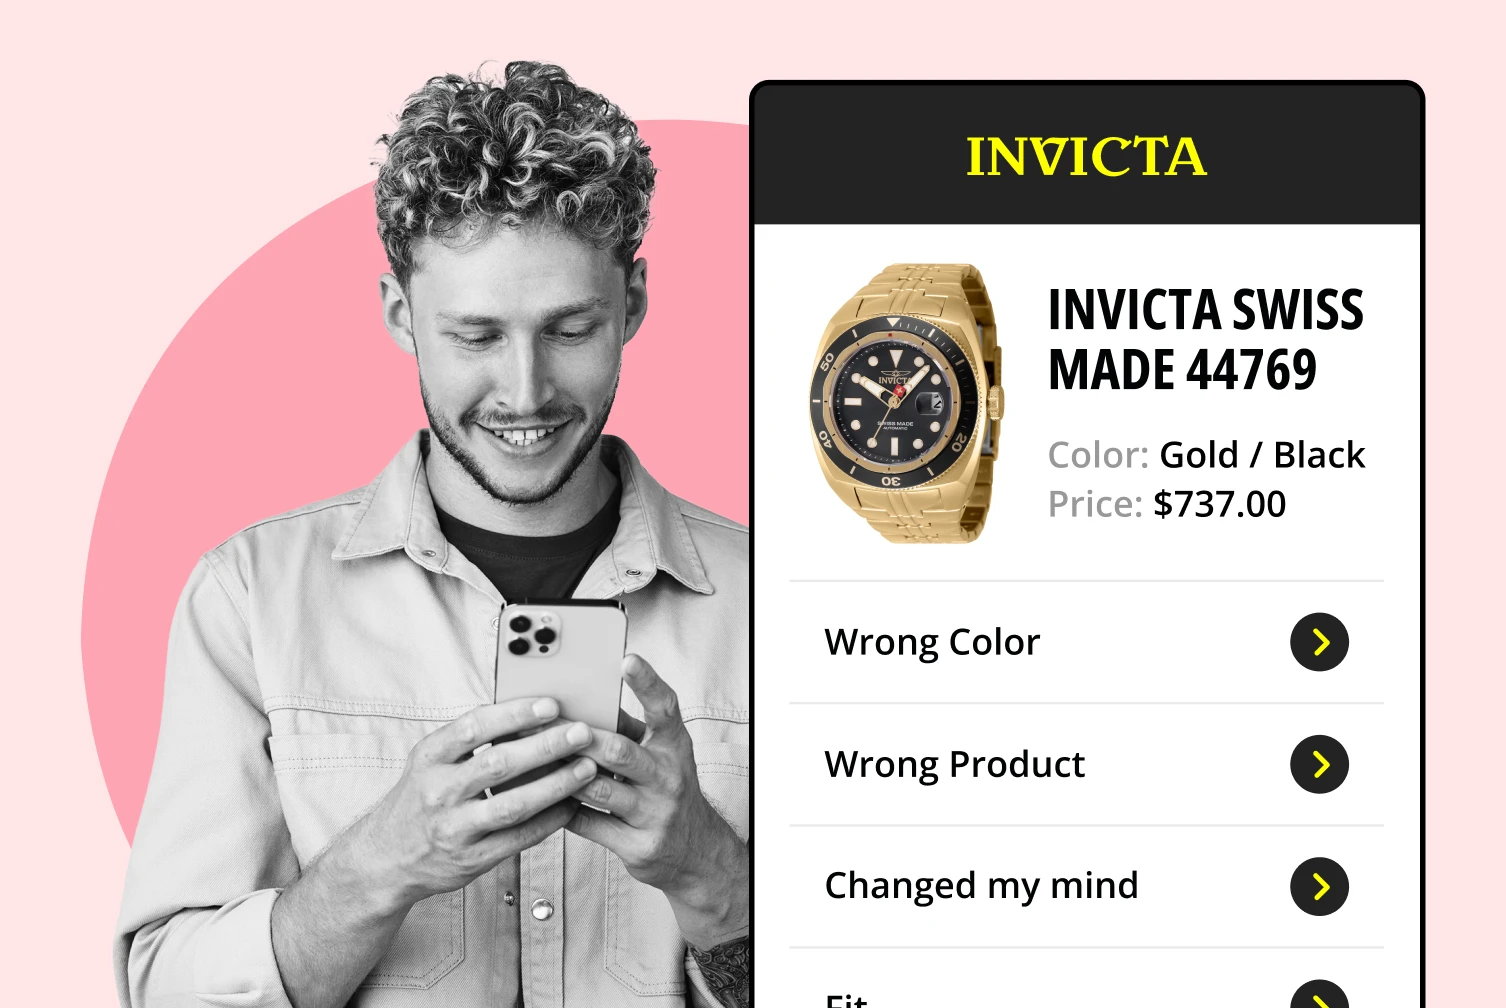 Invicta watches using WeSupply self-service returns